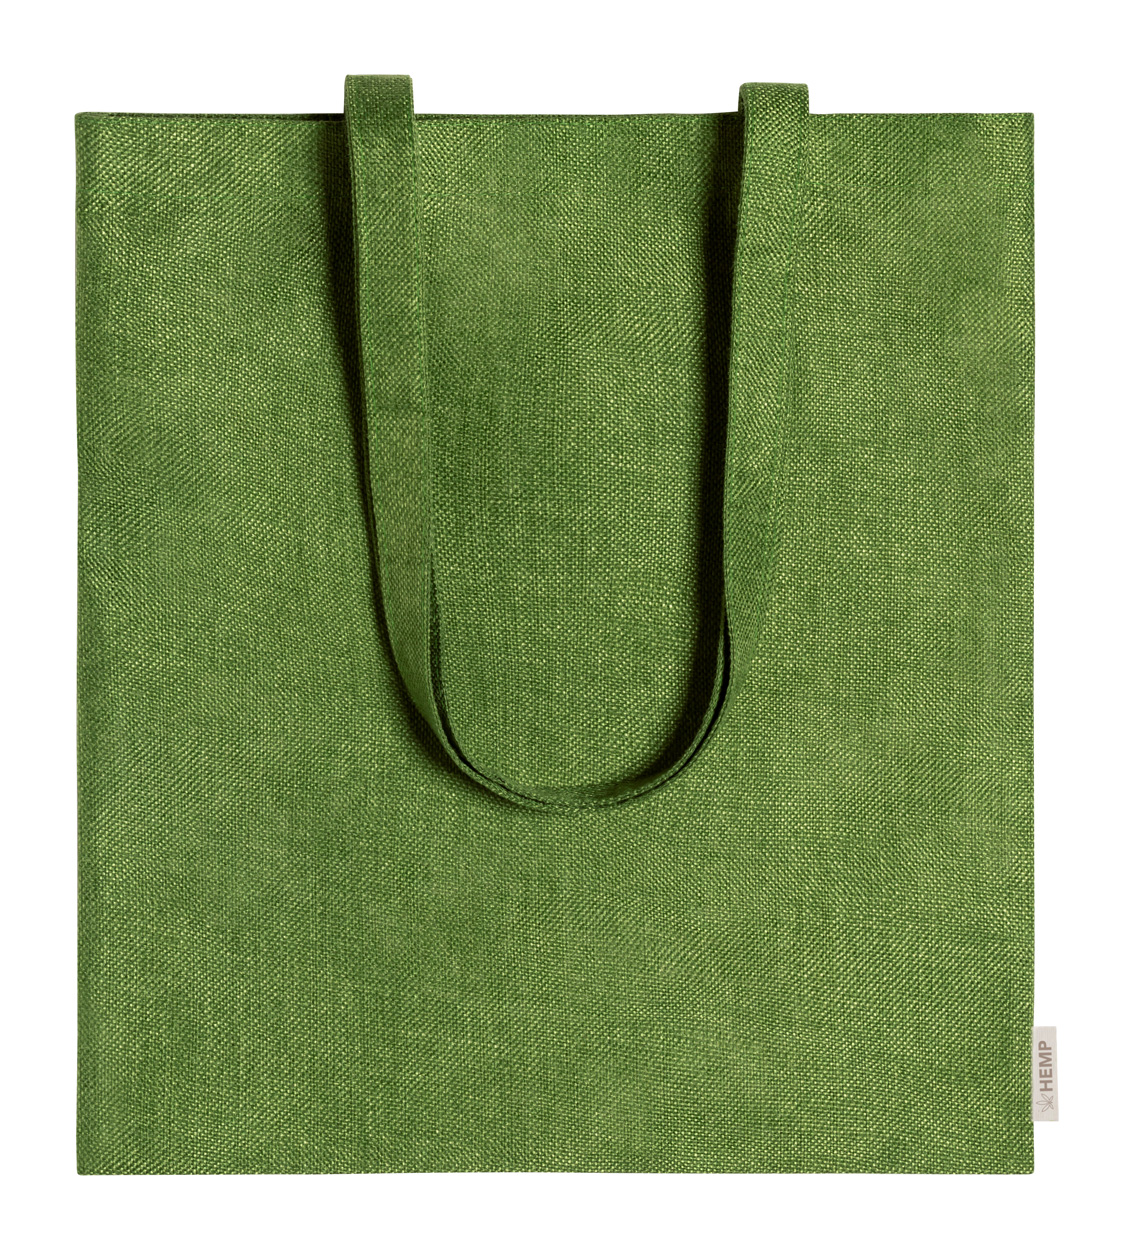 Misix hemp shopping bag - green